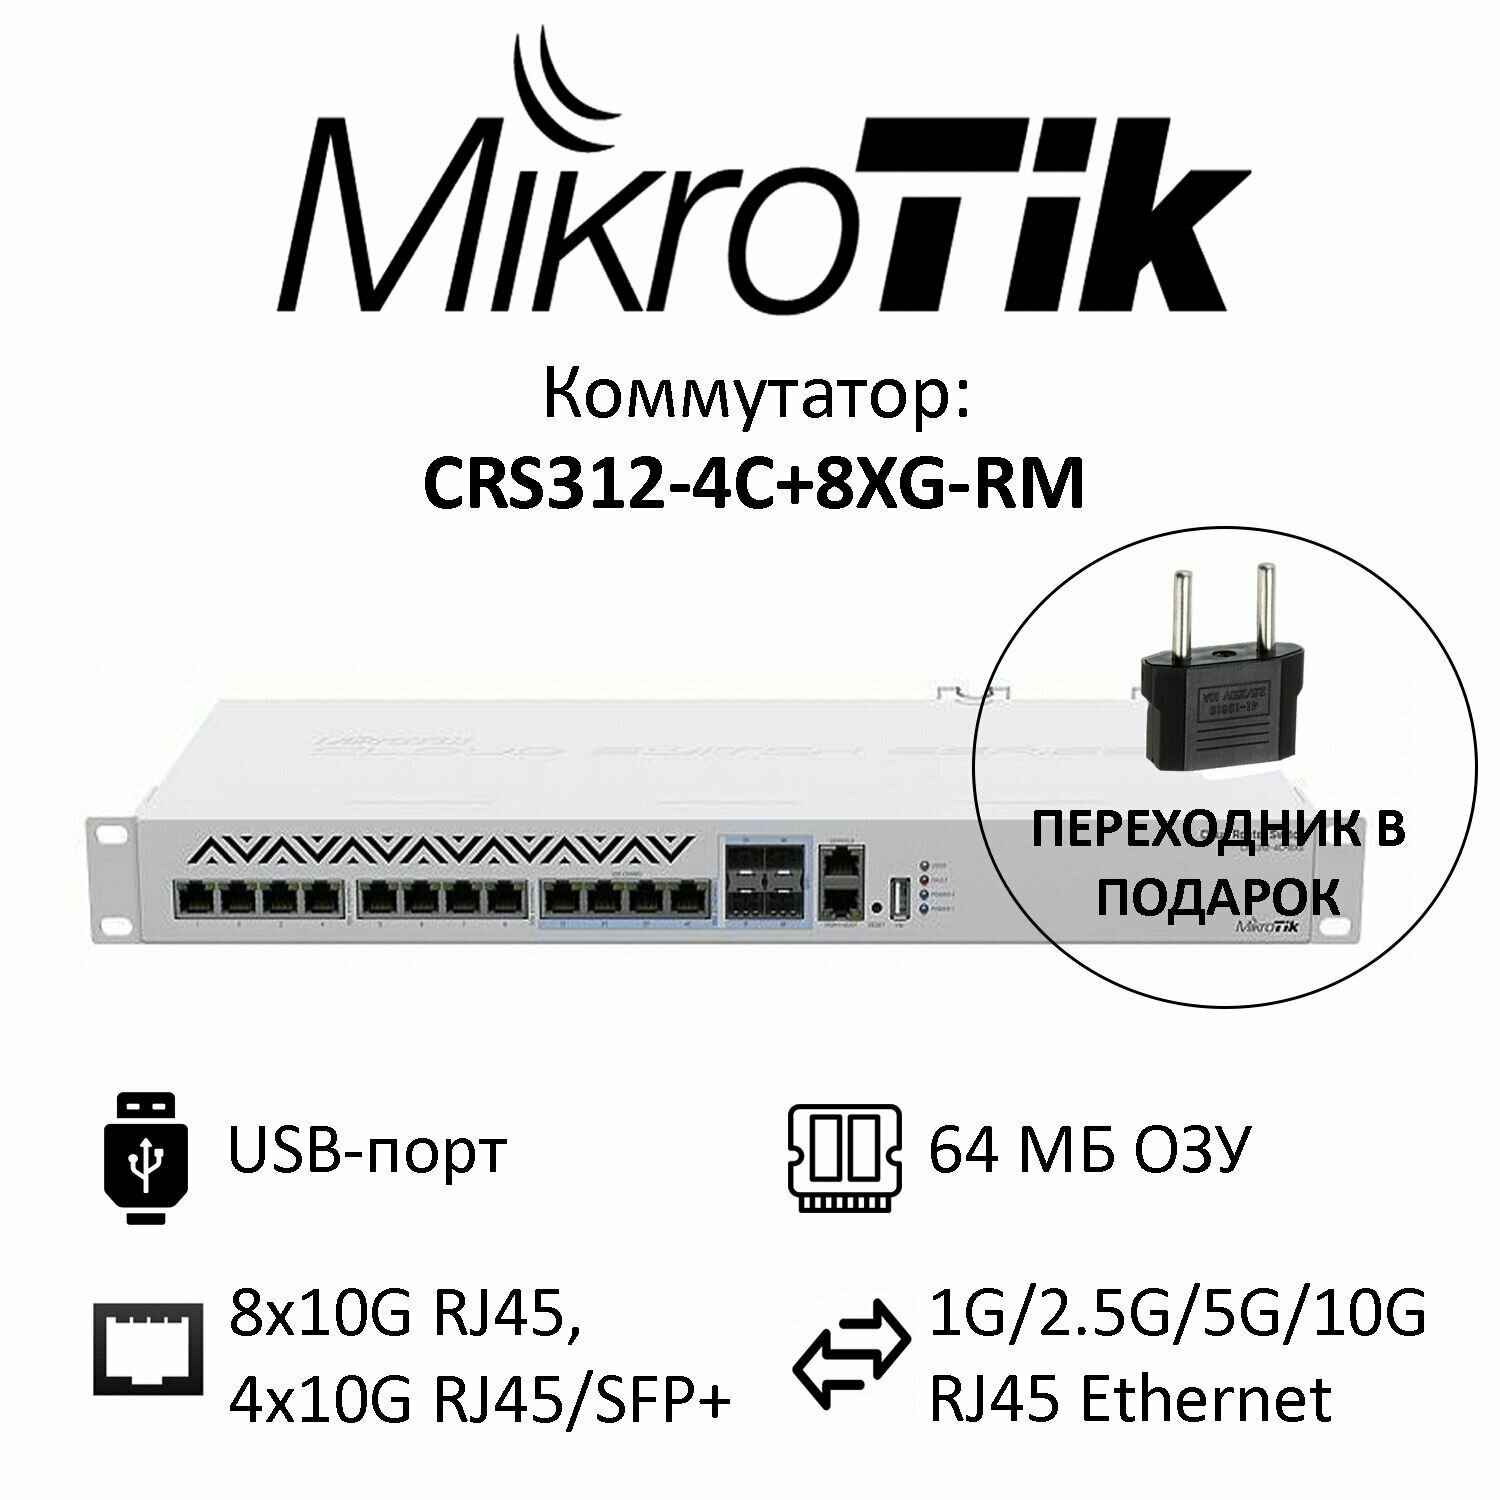 Коммутатор Mikrotik CRS312-4C+8XG-RM